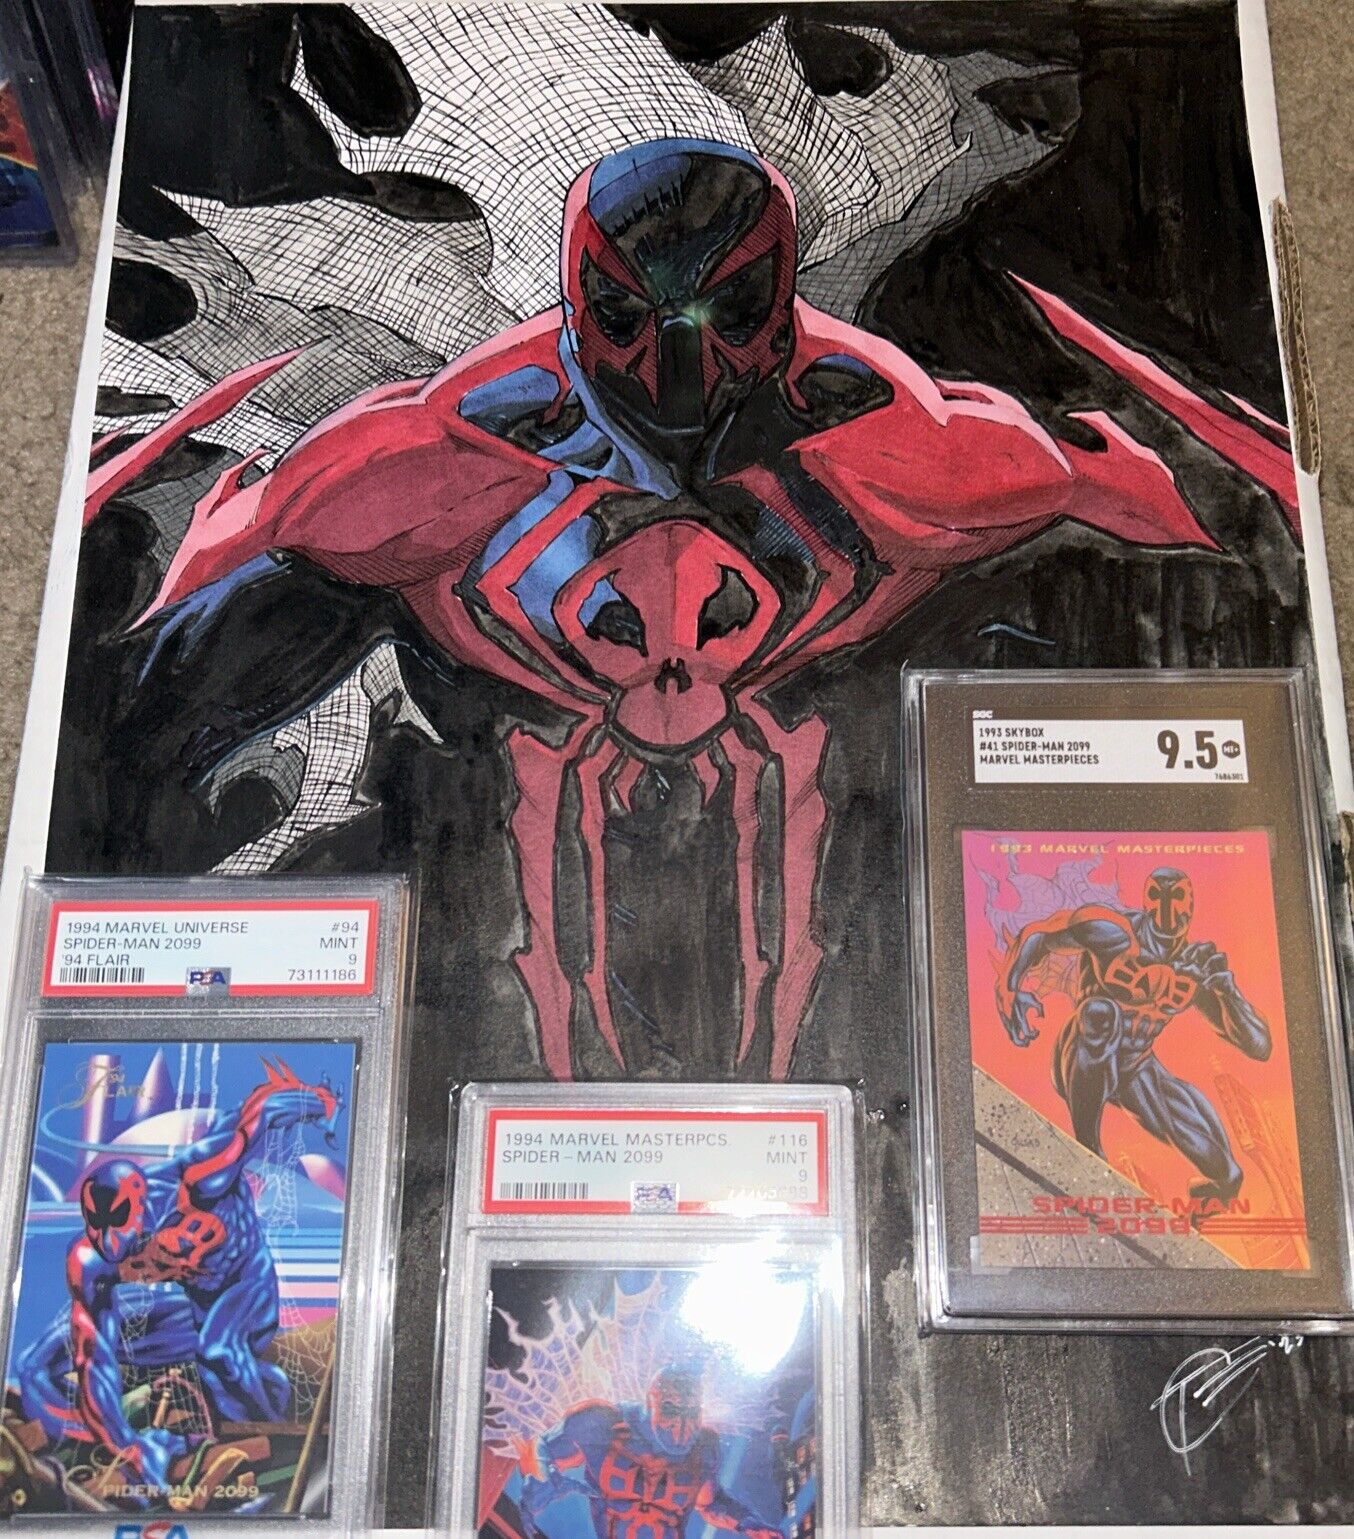 Spiderman 2099 14x11 Huge Art Piece Spiderman + Bonus Marvel Cards SGC PSA Grade